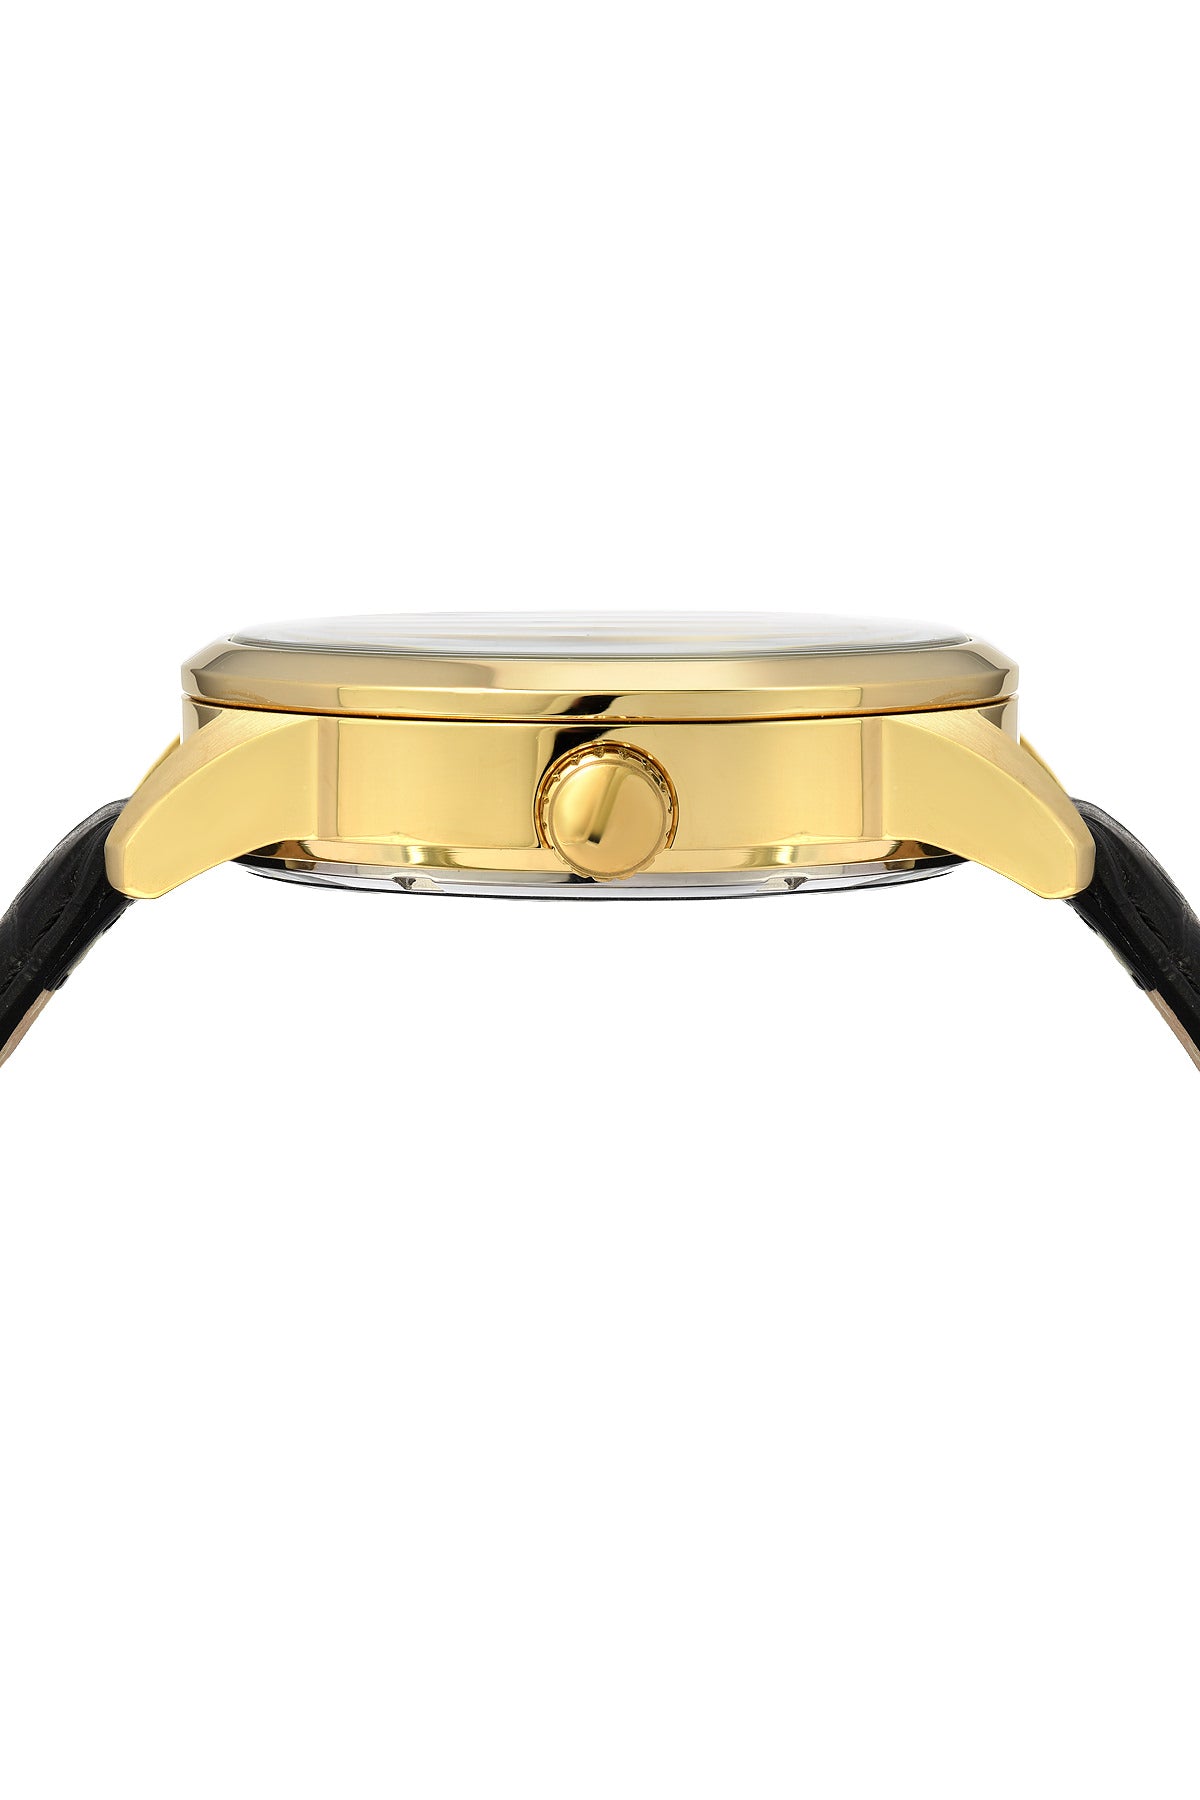 Porsamo Bleu Cassius luxury automatic men's watch, genuine leather band, gold, black, white 801BCAL